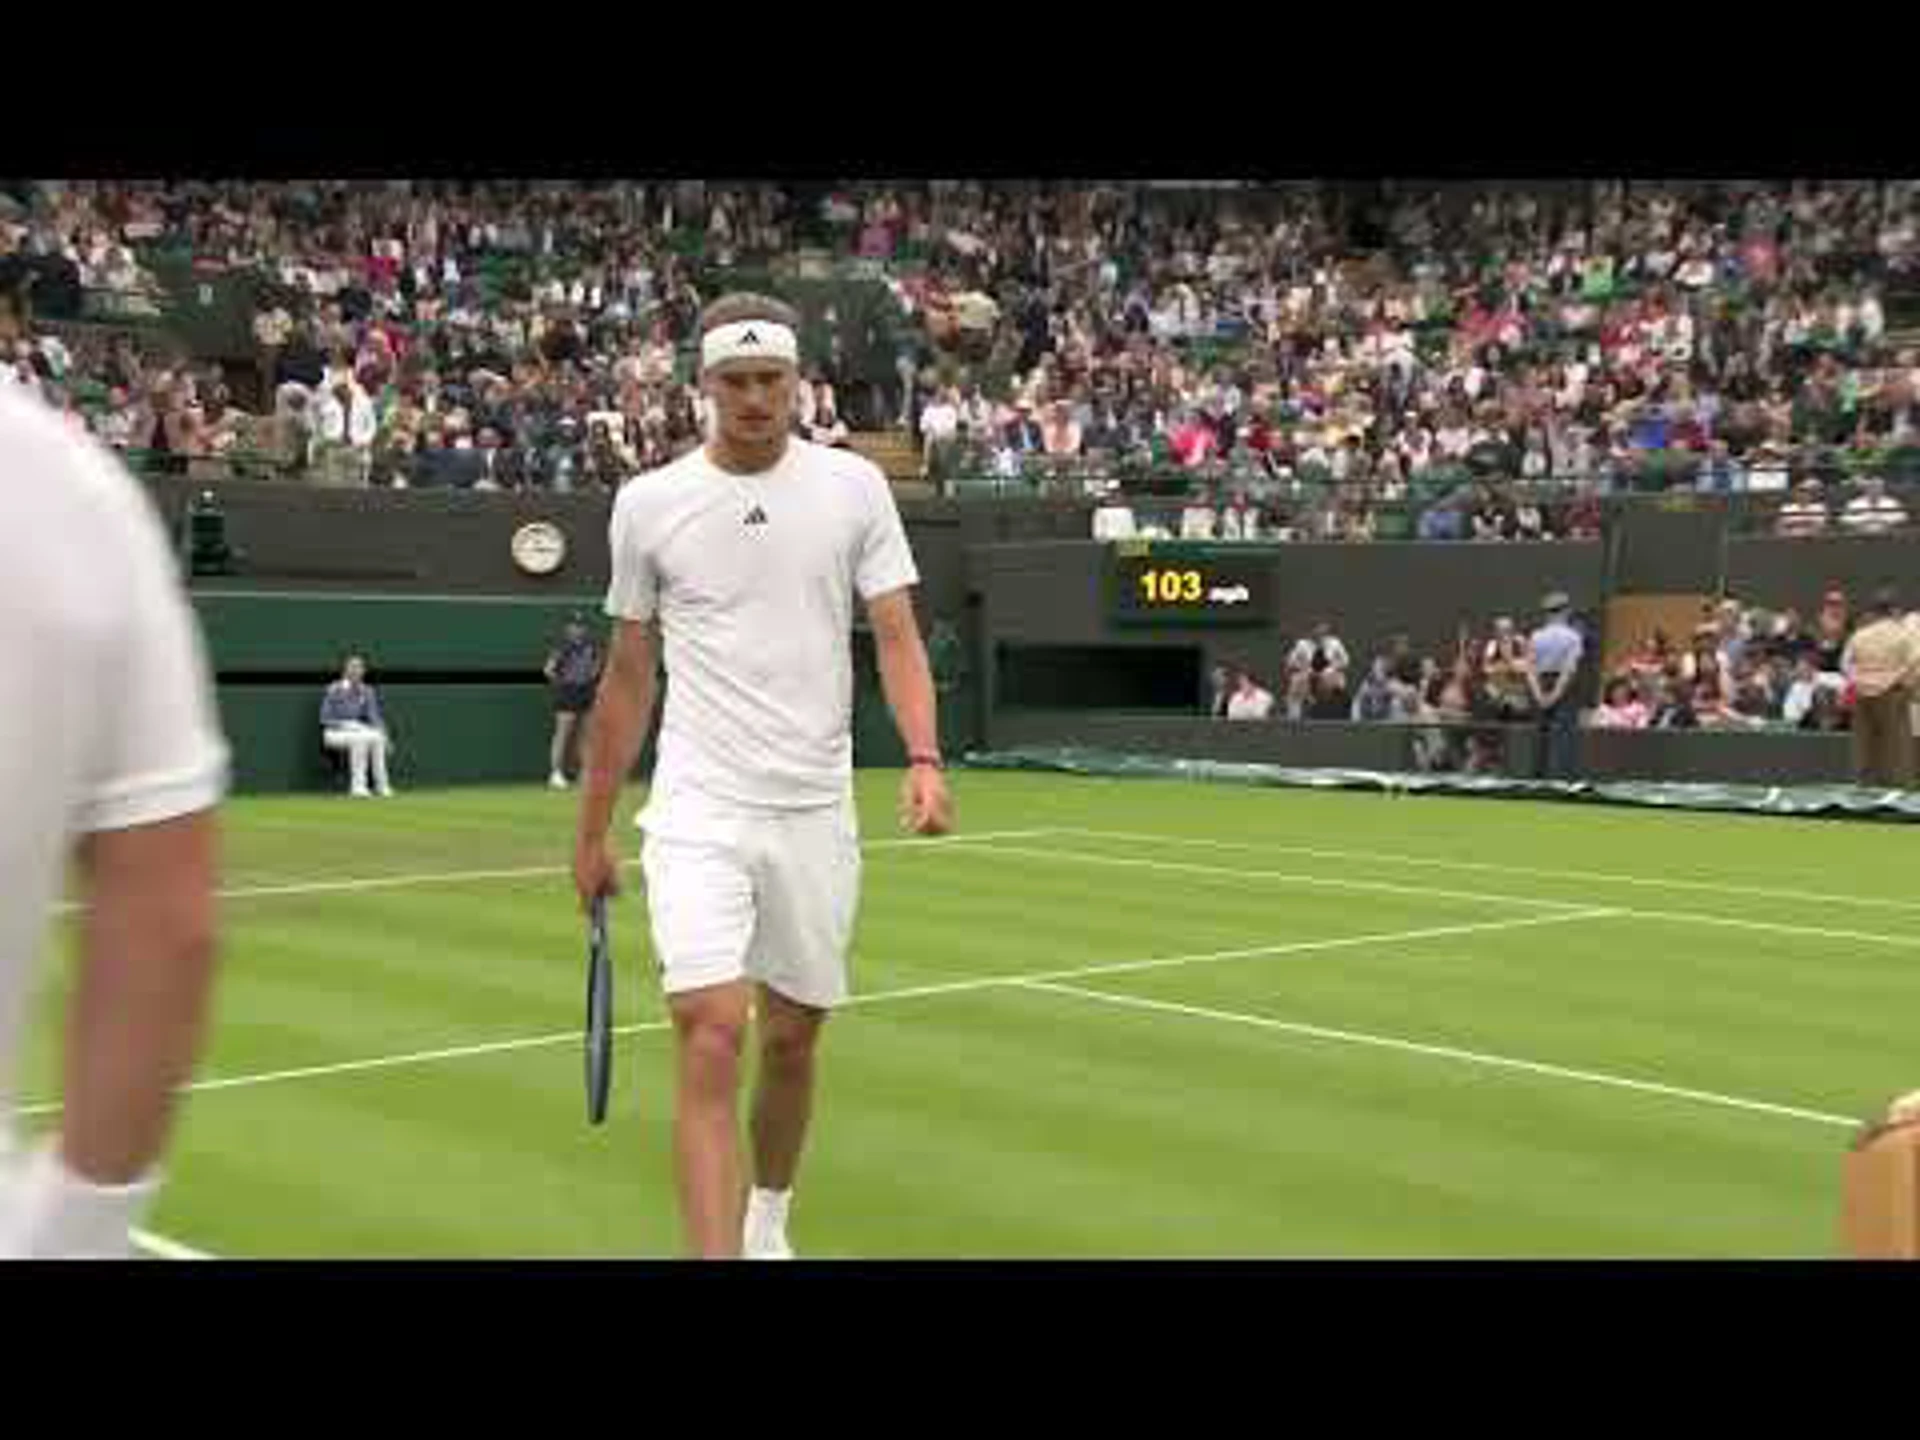 Roberto Carballes Baena v Alexander Zverev | Match Highlights | Wimbledon